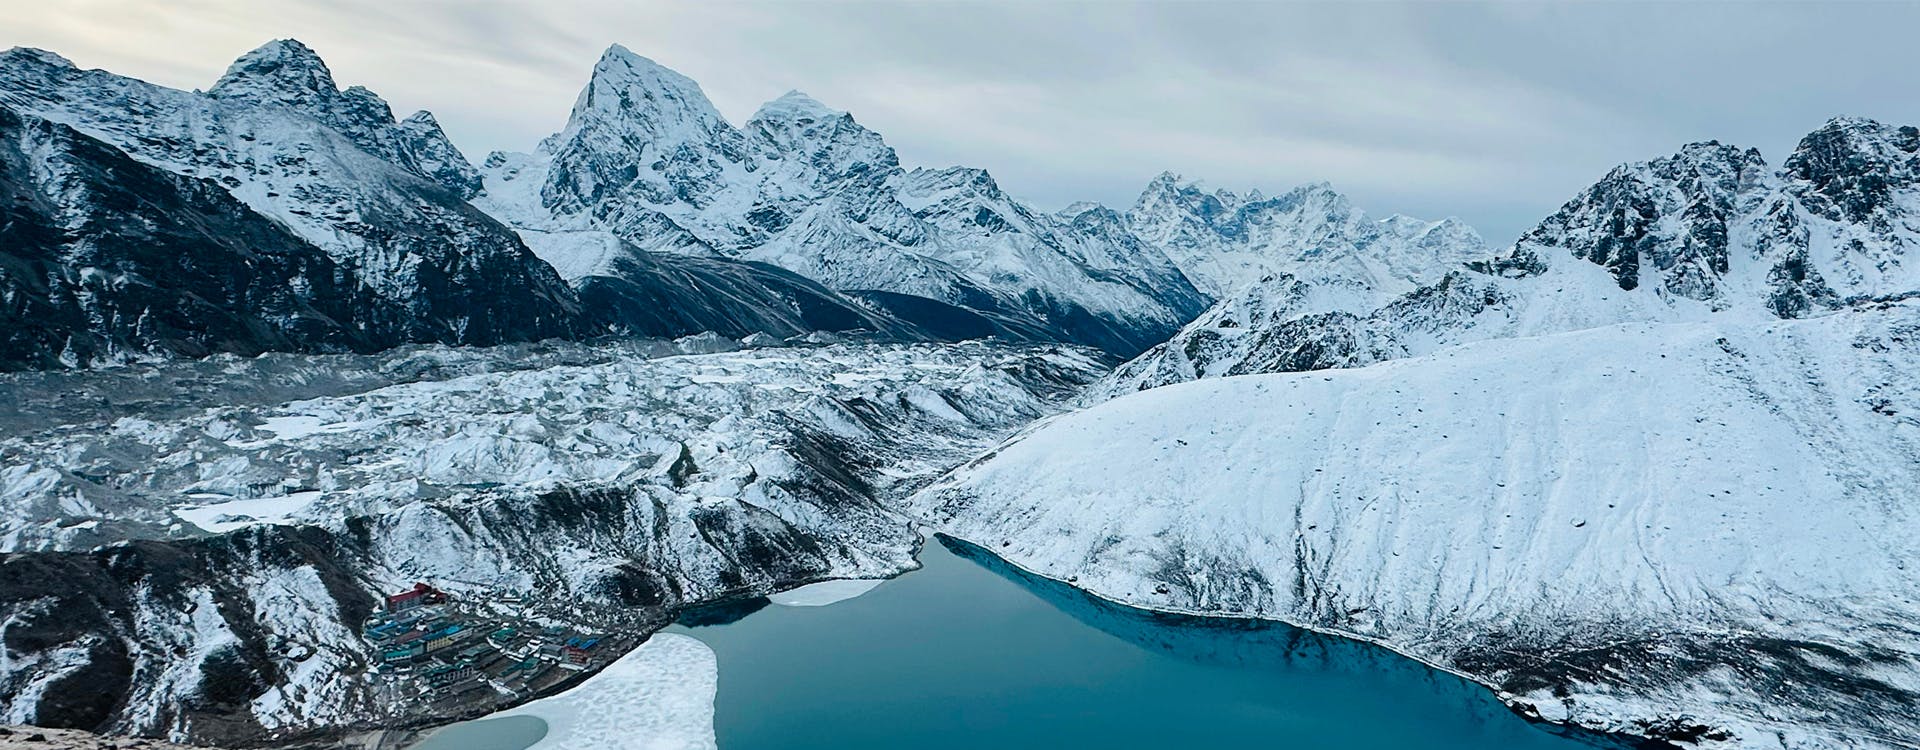 7 Best Treks in the Everest Region